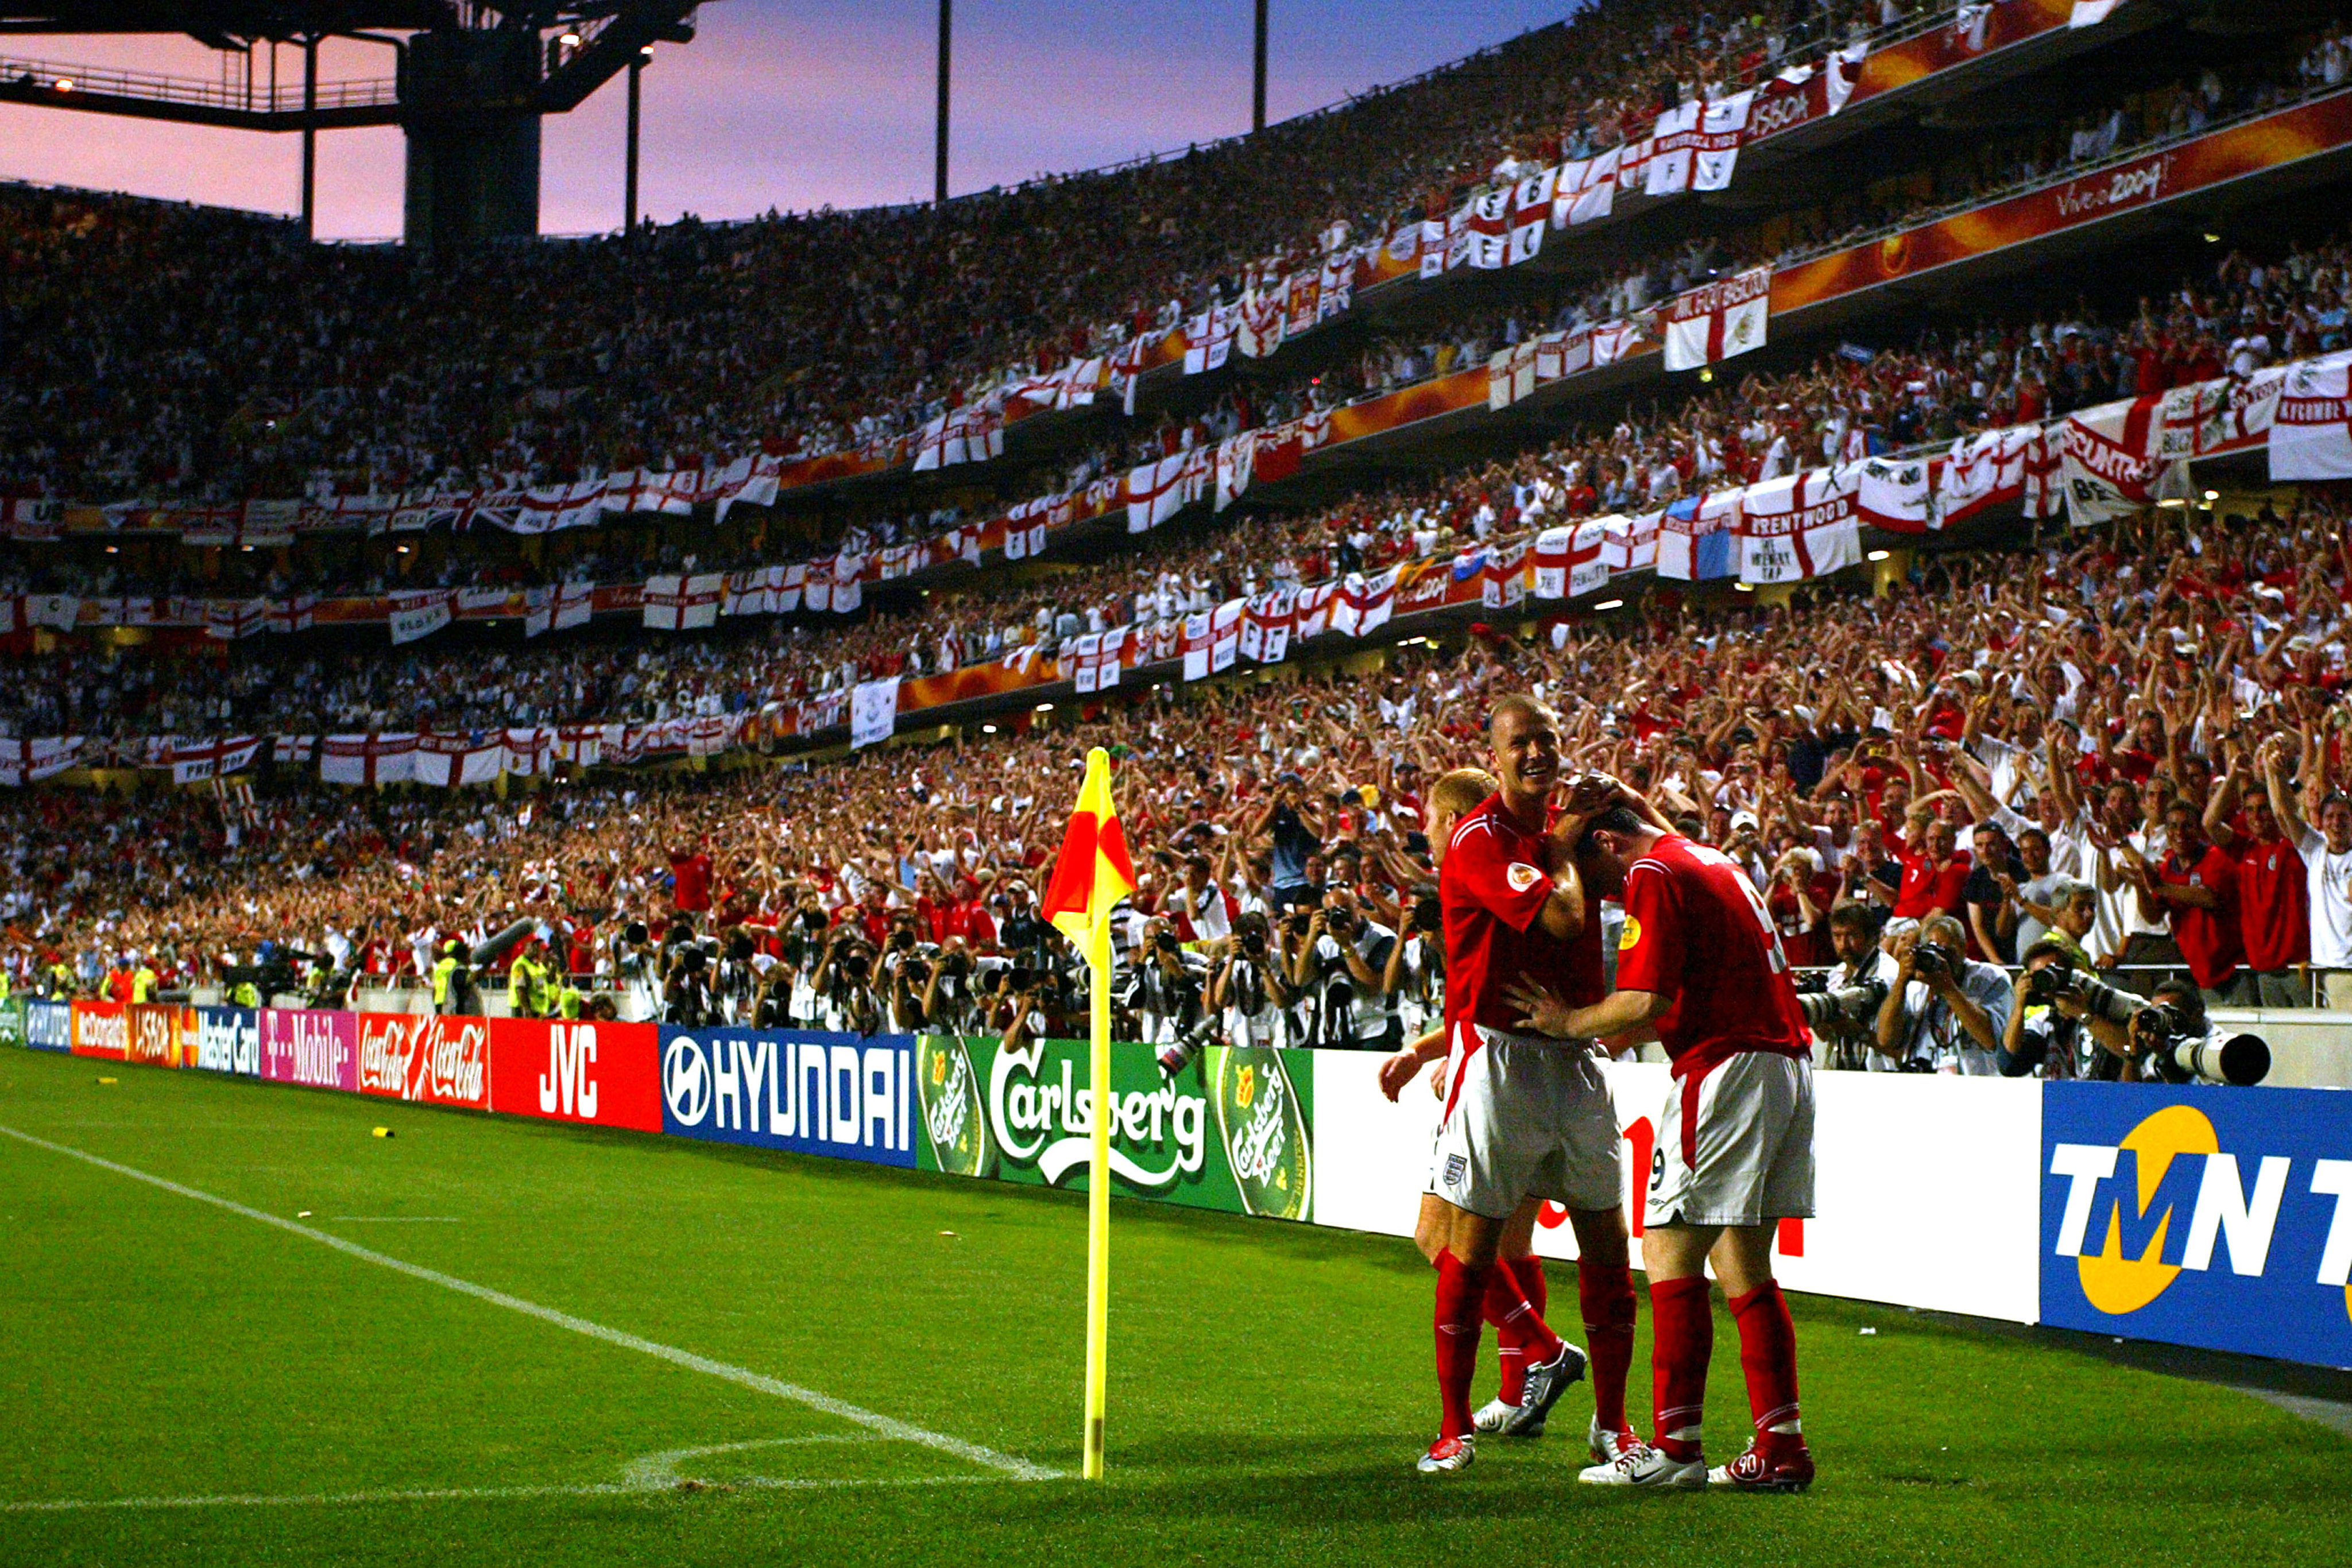 Wayne Rooney celebrates scoring against Croatia at Euro 2004